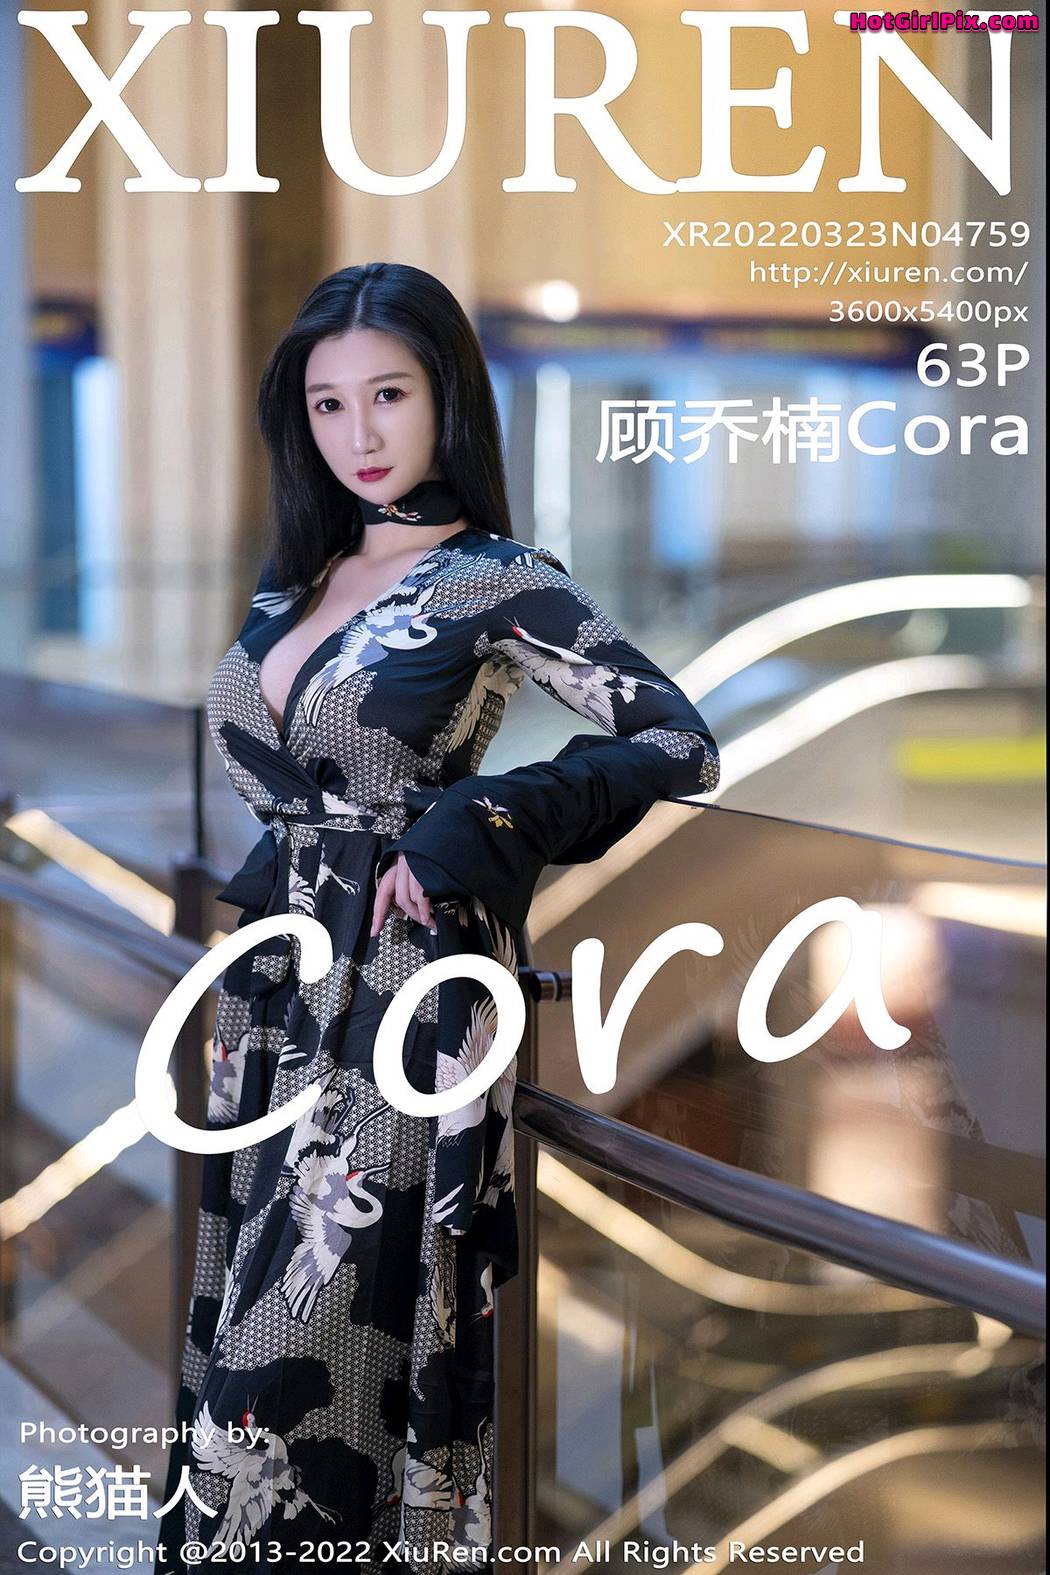 [XIUREN] No.4759 顾乔楠Cora Cover Photo